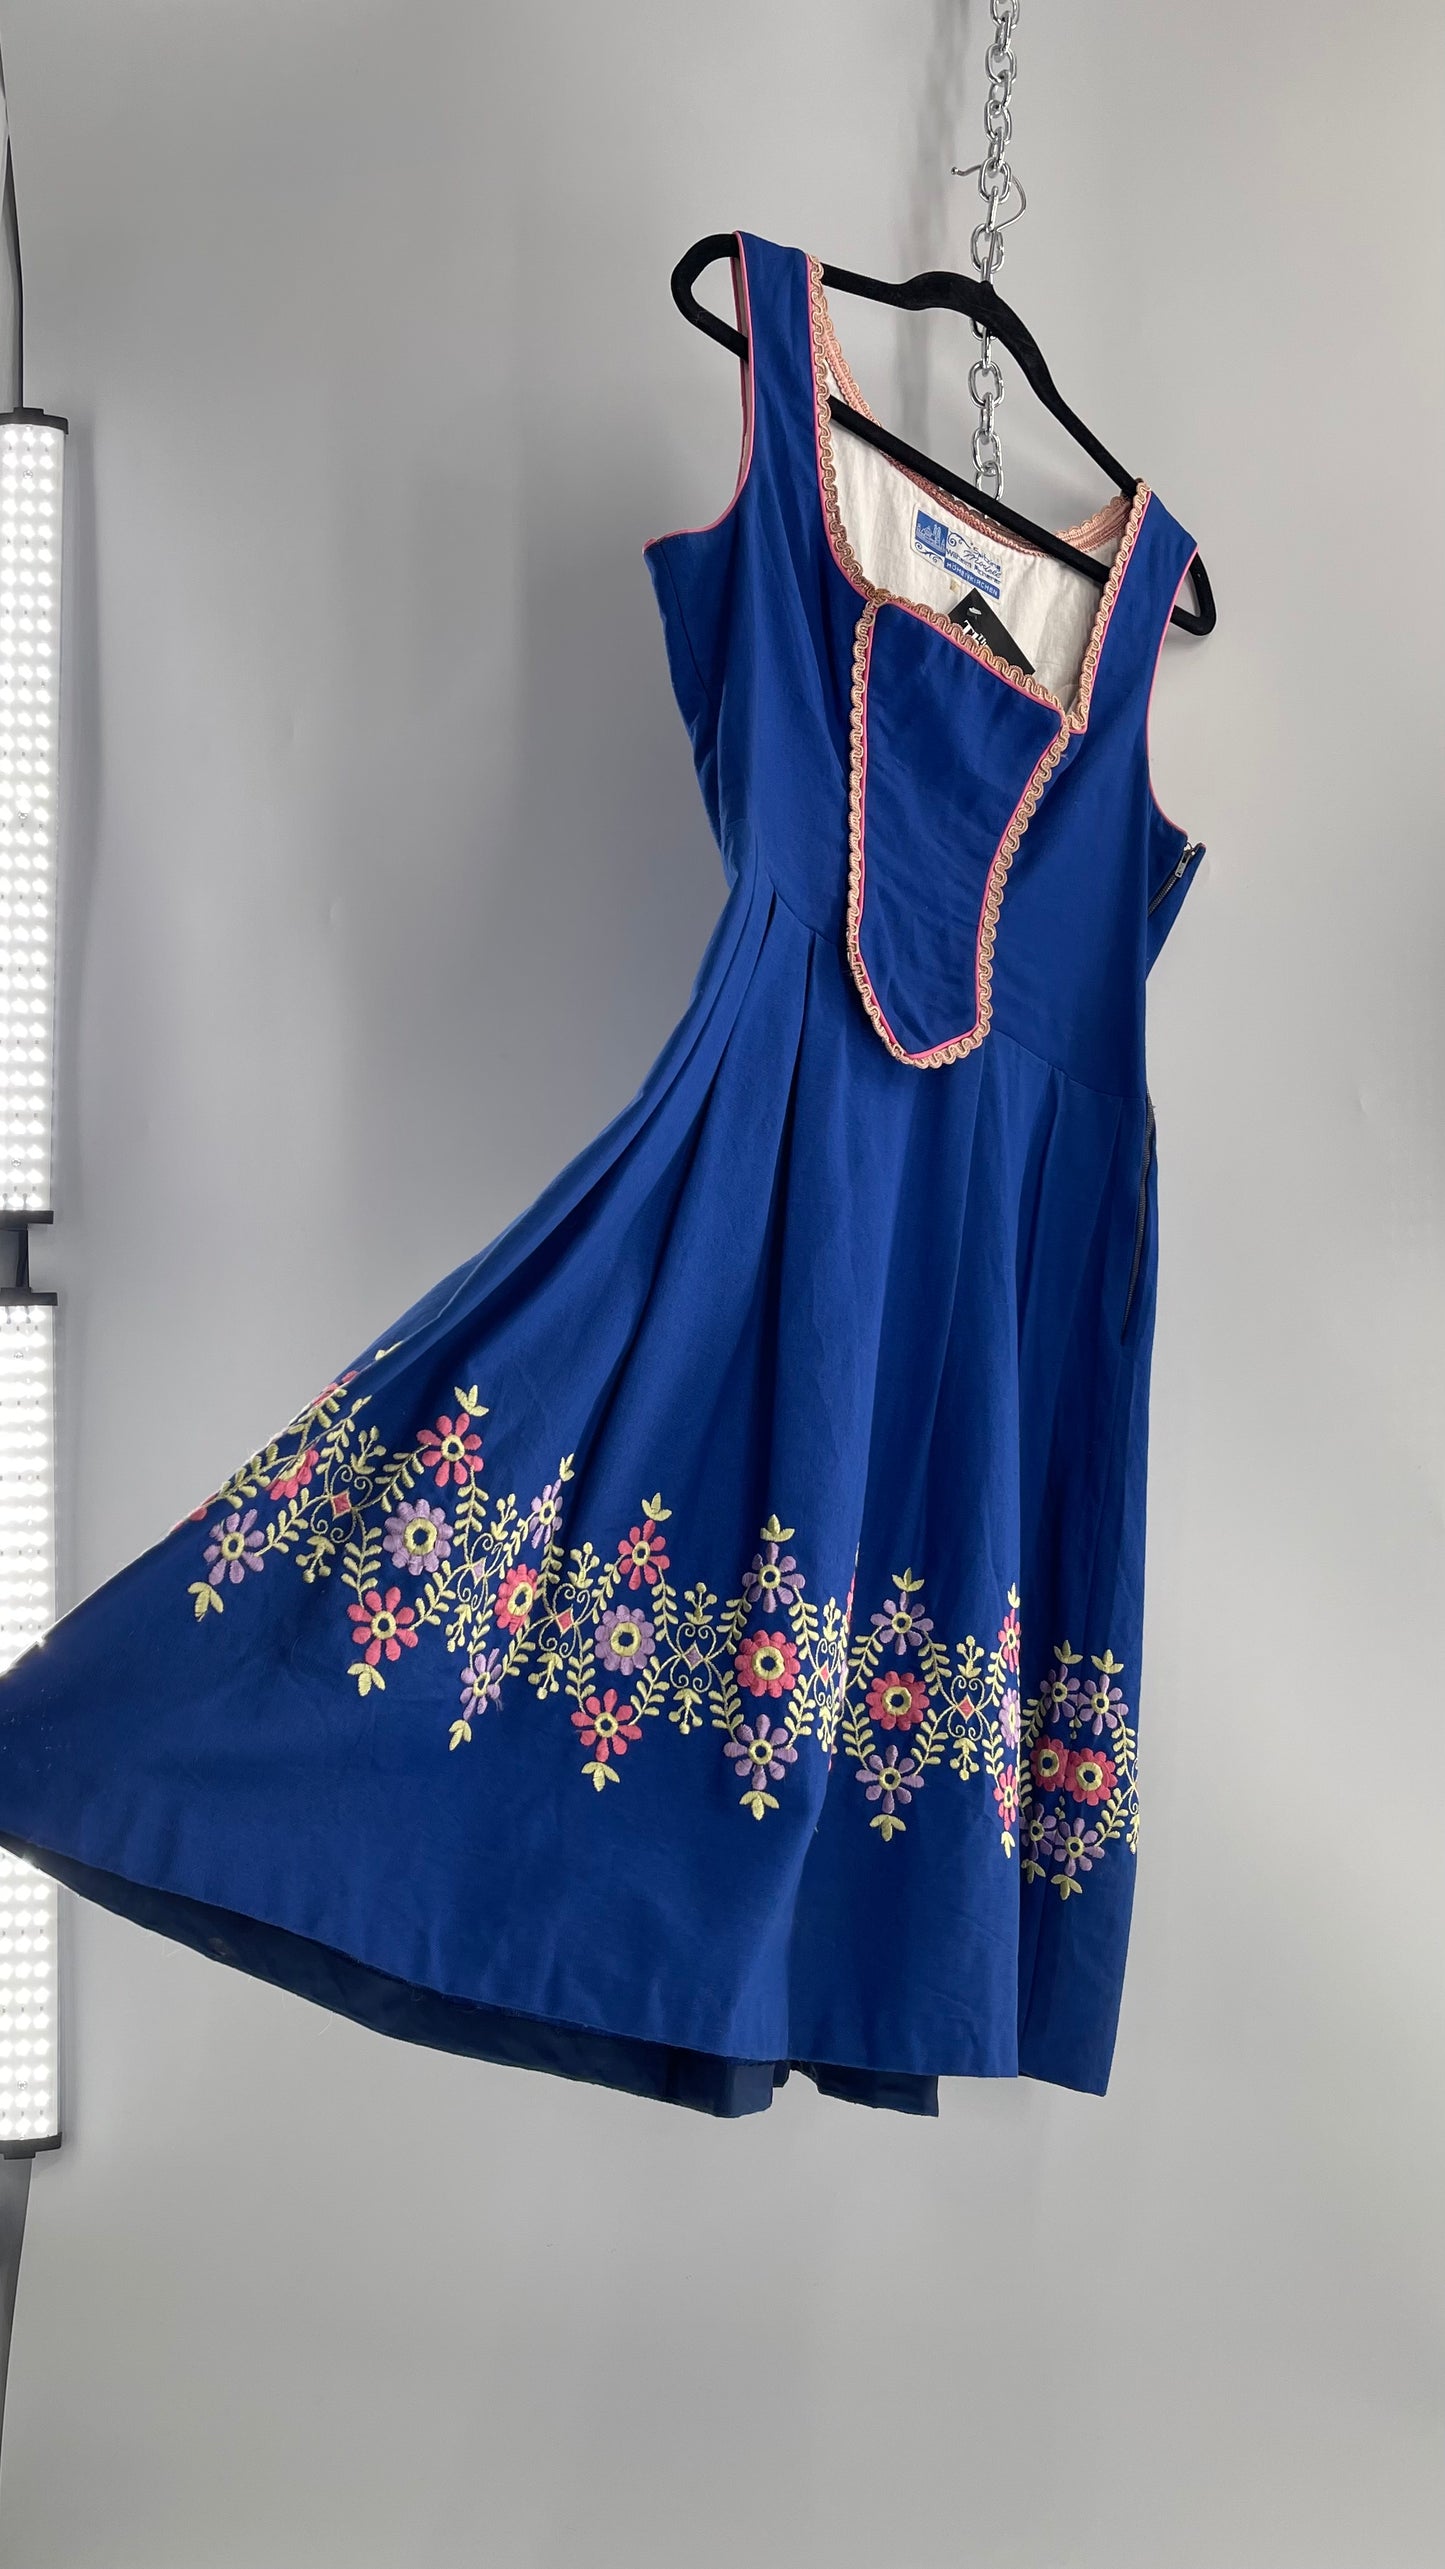 Vintage 1970s Spitzing Modell Wilhelm Picherer Hohenkirchen Traditional German Hand Embroidered Royal Blue Dress (M)